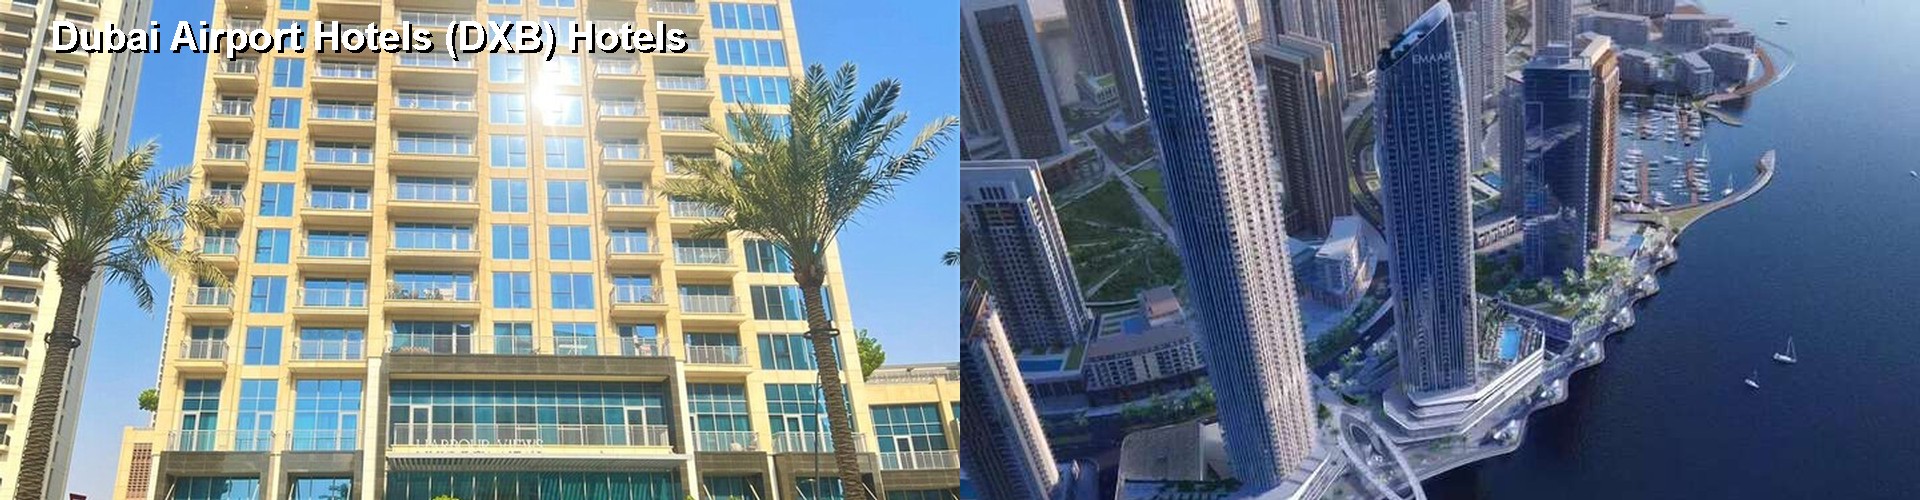 5 Best Hotels near Dubai Airport Hotels (DXB)